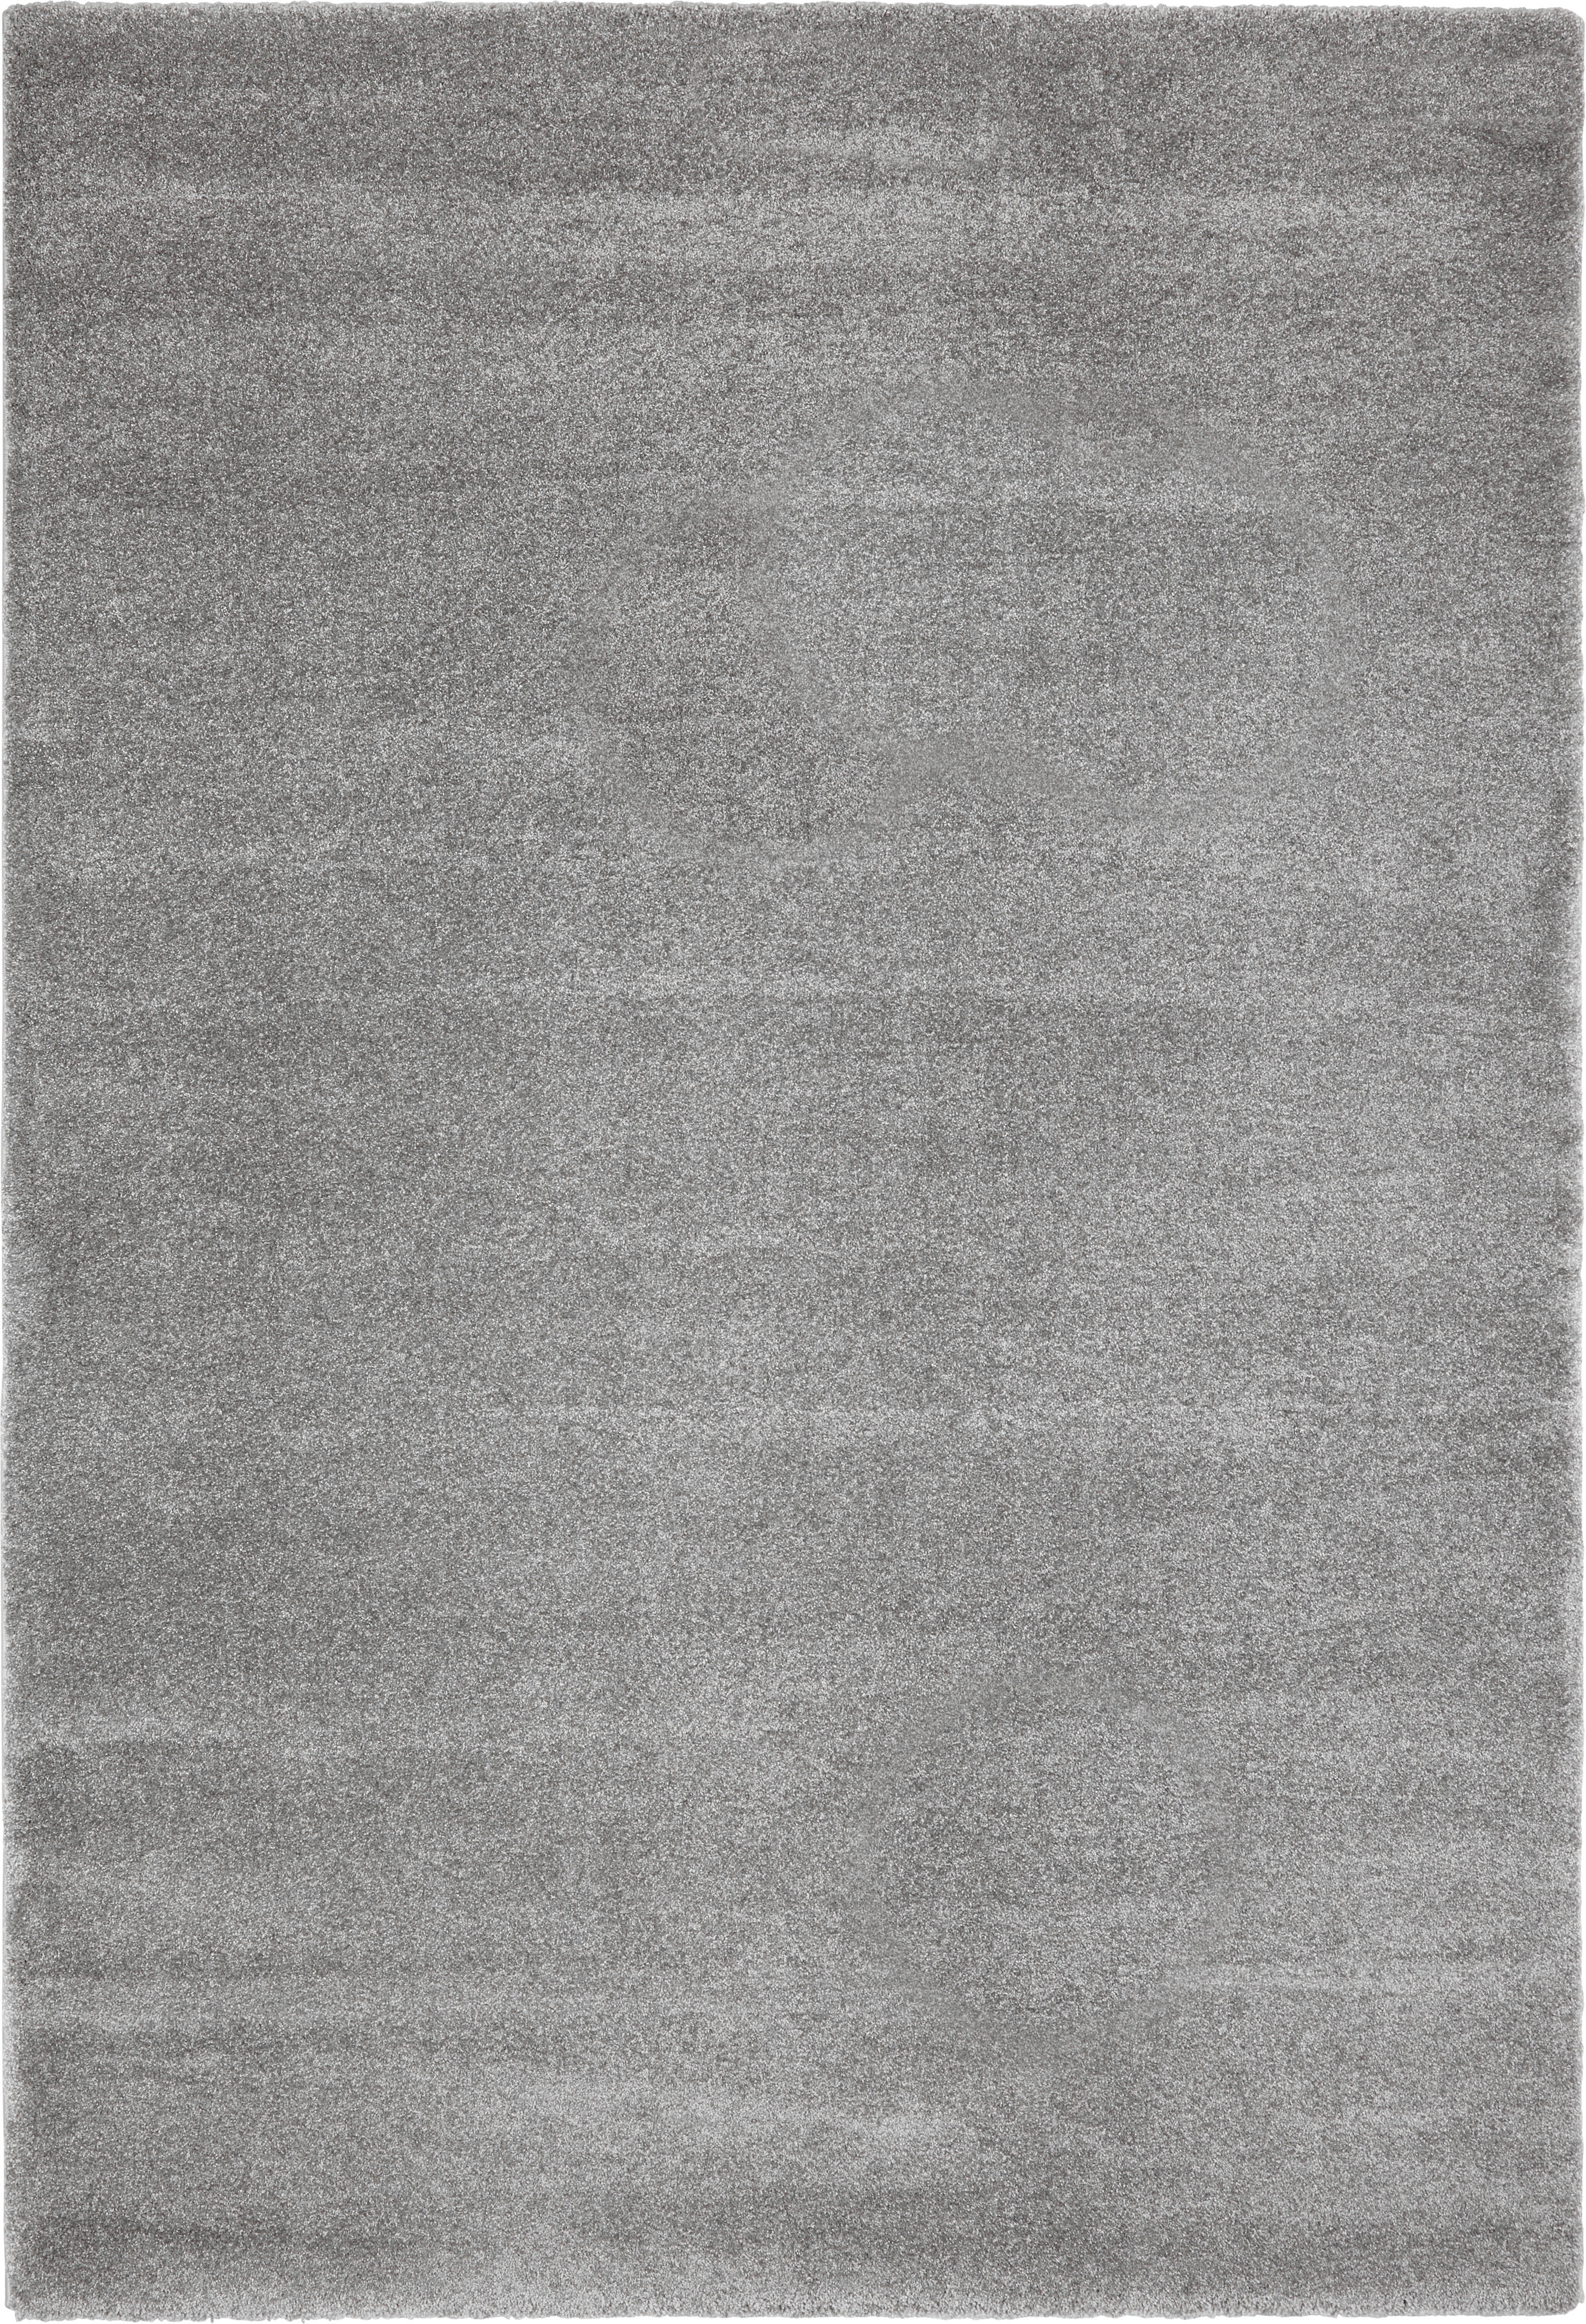 VÄVD MATTA Apolima  - silver, Design, textil (60/110cm) - Novel